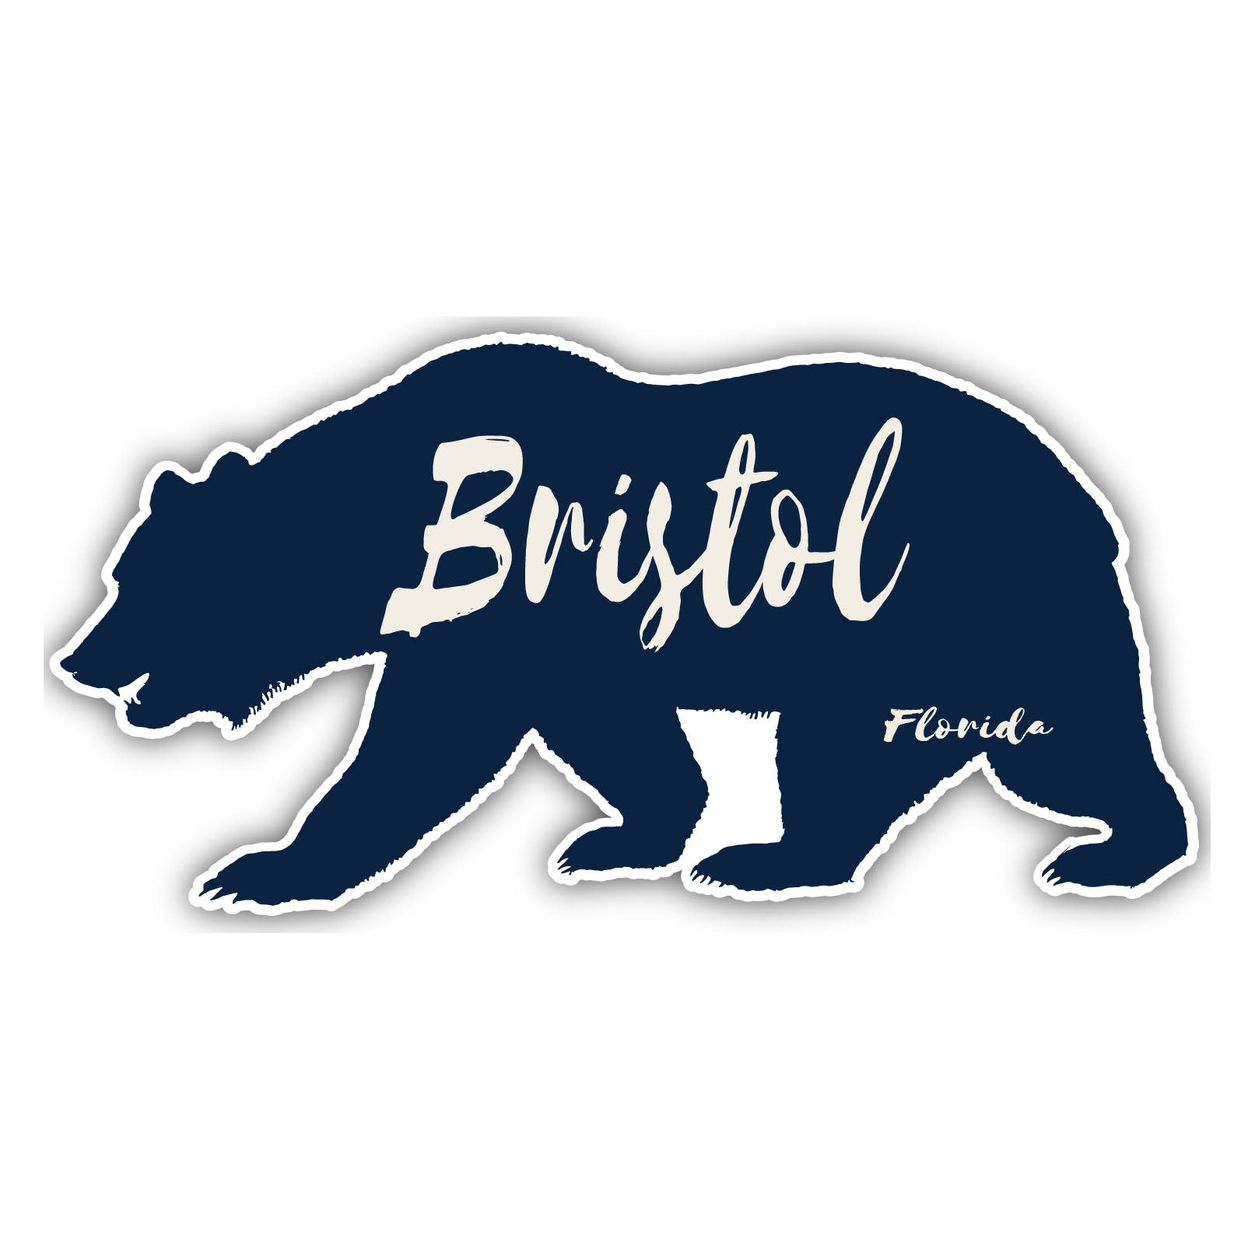 Bristol Florida Souvenir Decorative Stickers (Choose Theme And Size) - Single Unit, 2-Inch, Bear